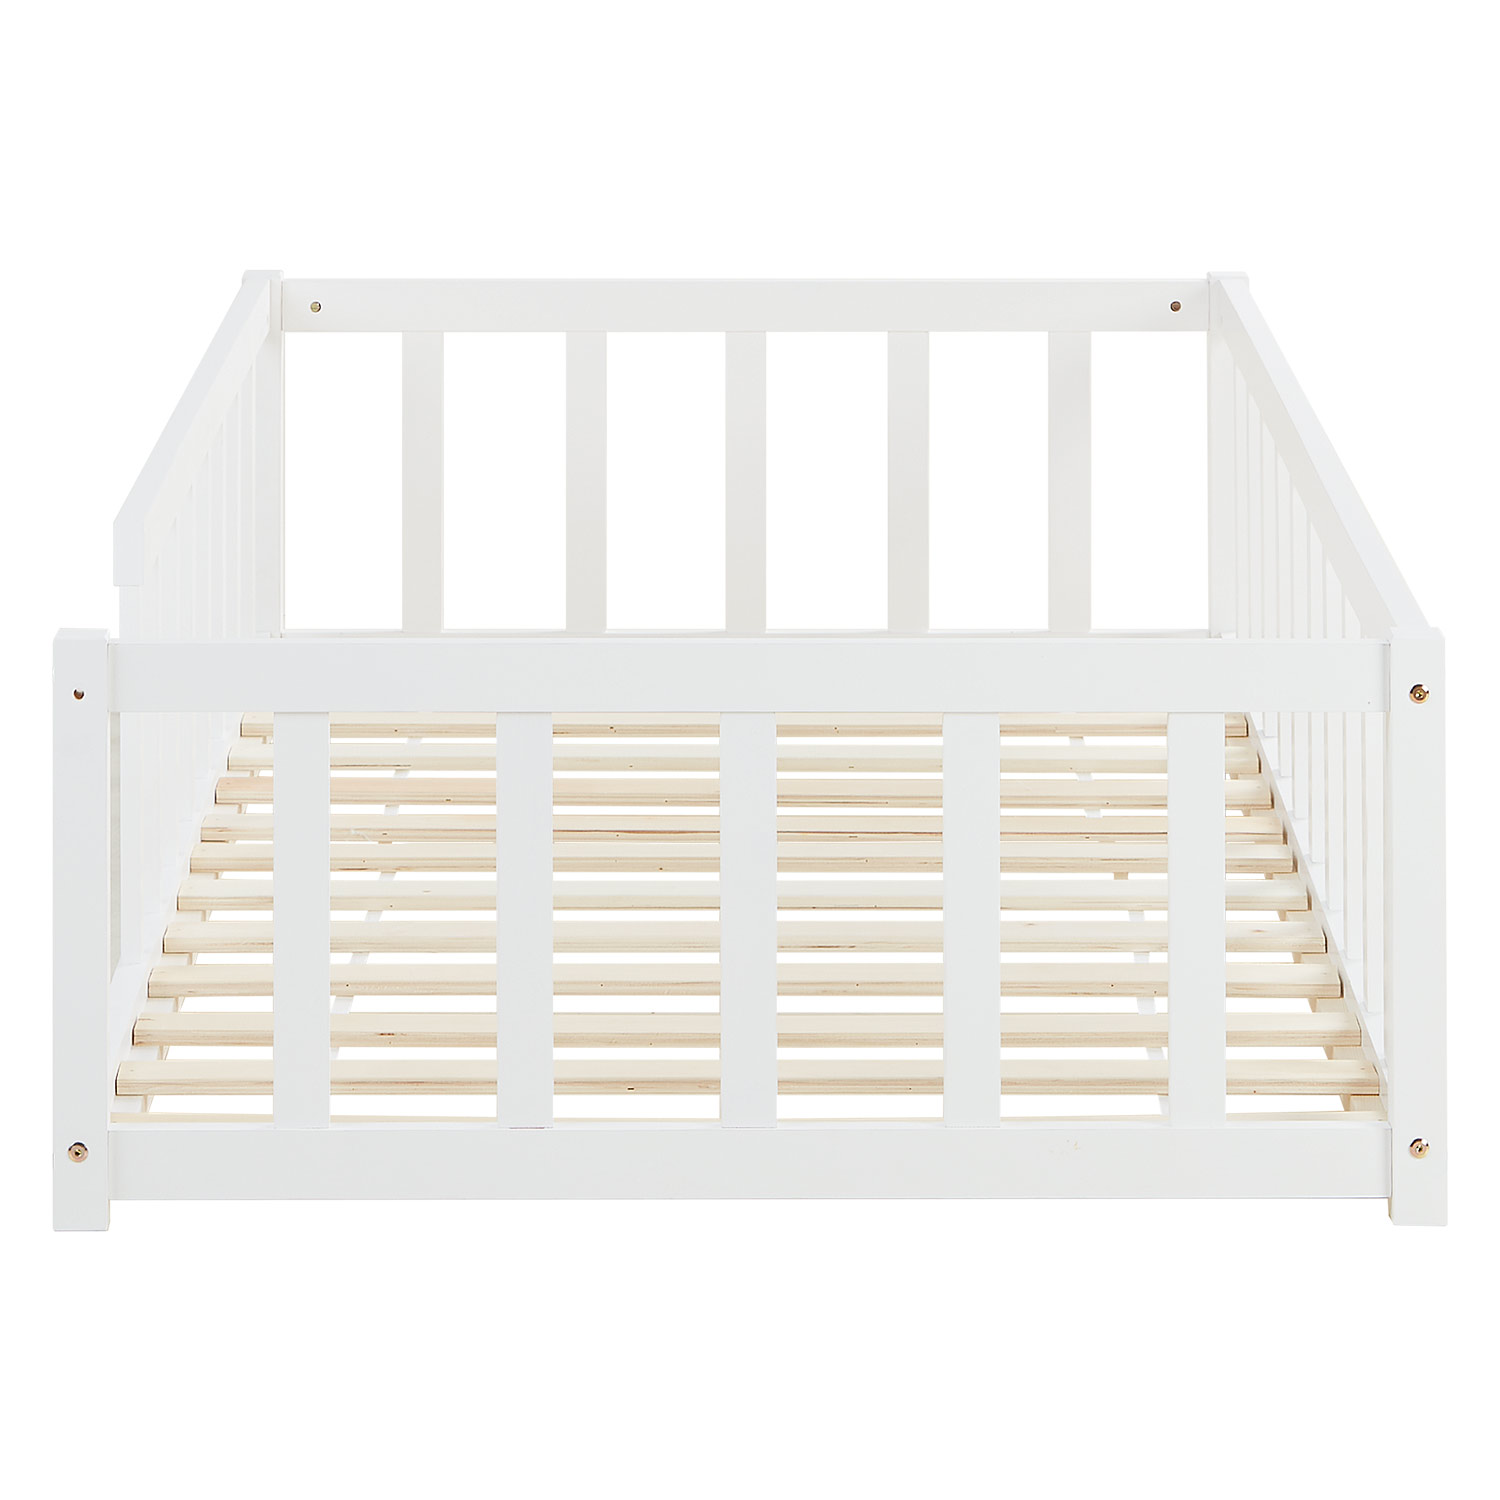 Kinderbett 90x200 Bodenbett mit Rausfallschutz Montessori Bett Kleinkindbett Holz Massiv Weiß Einzelbett Lattenrost Bettgestell 